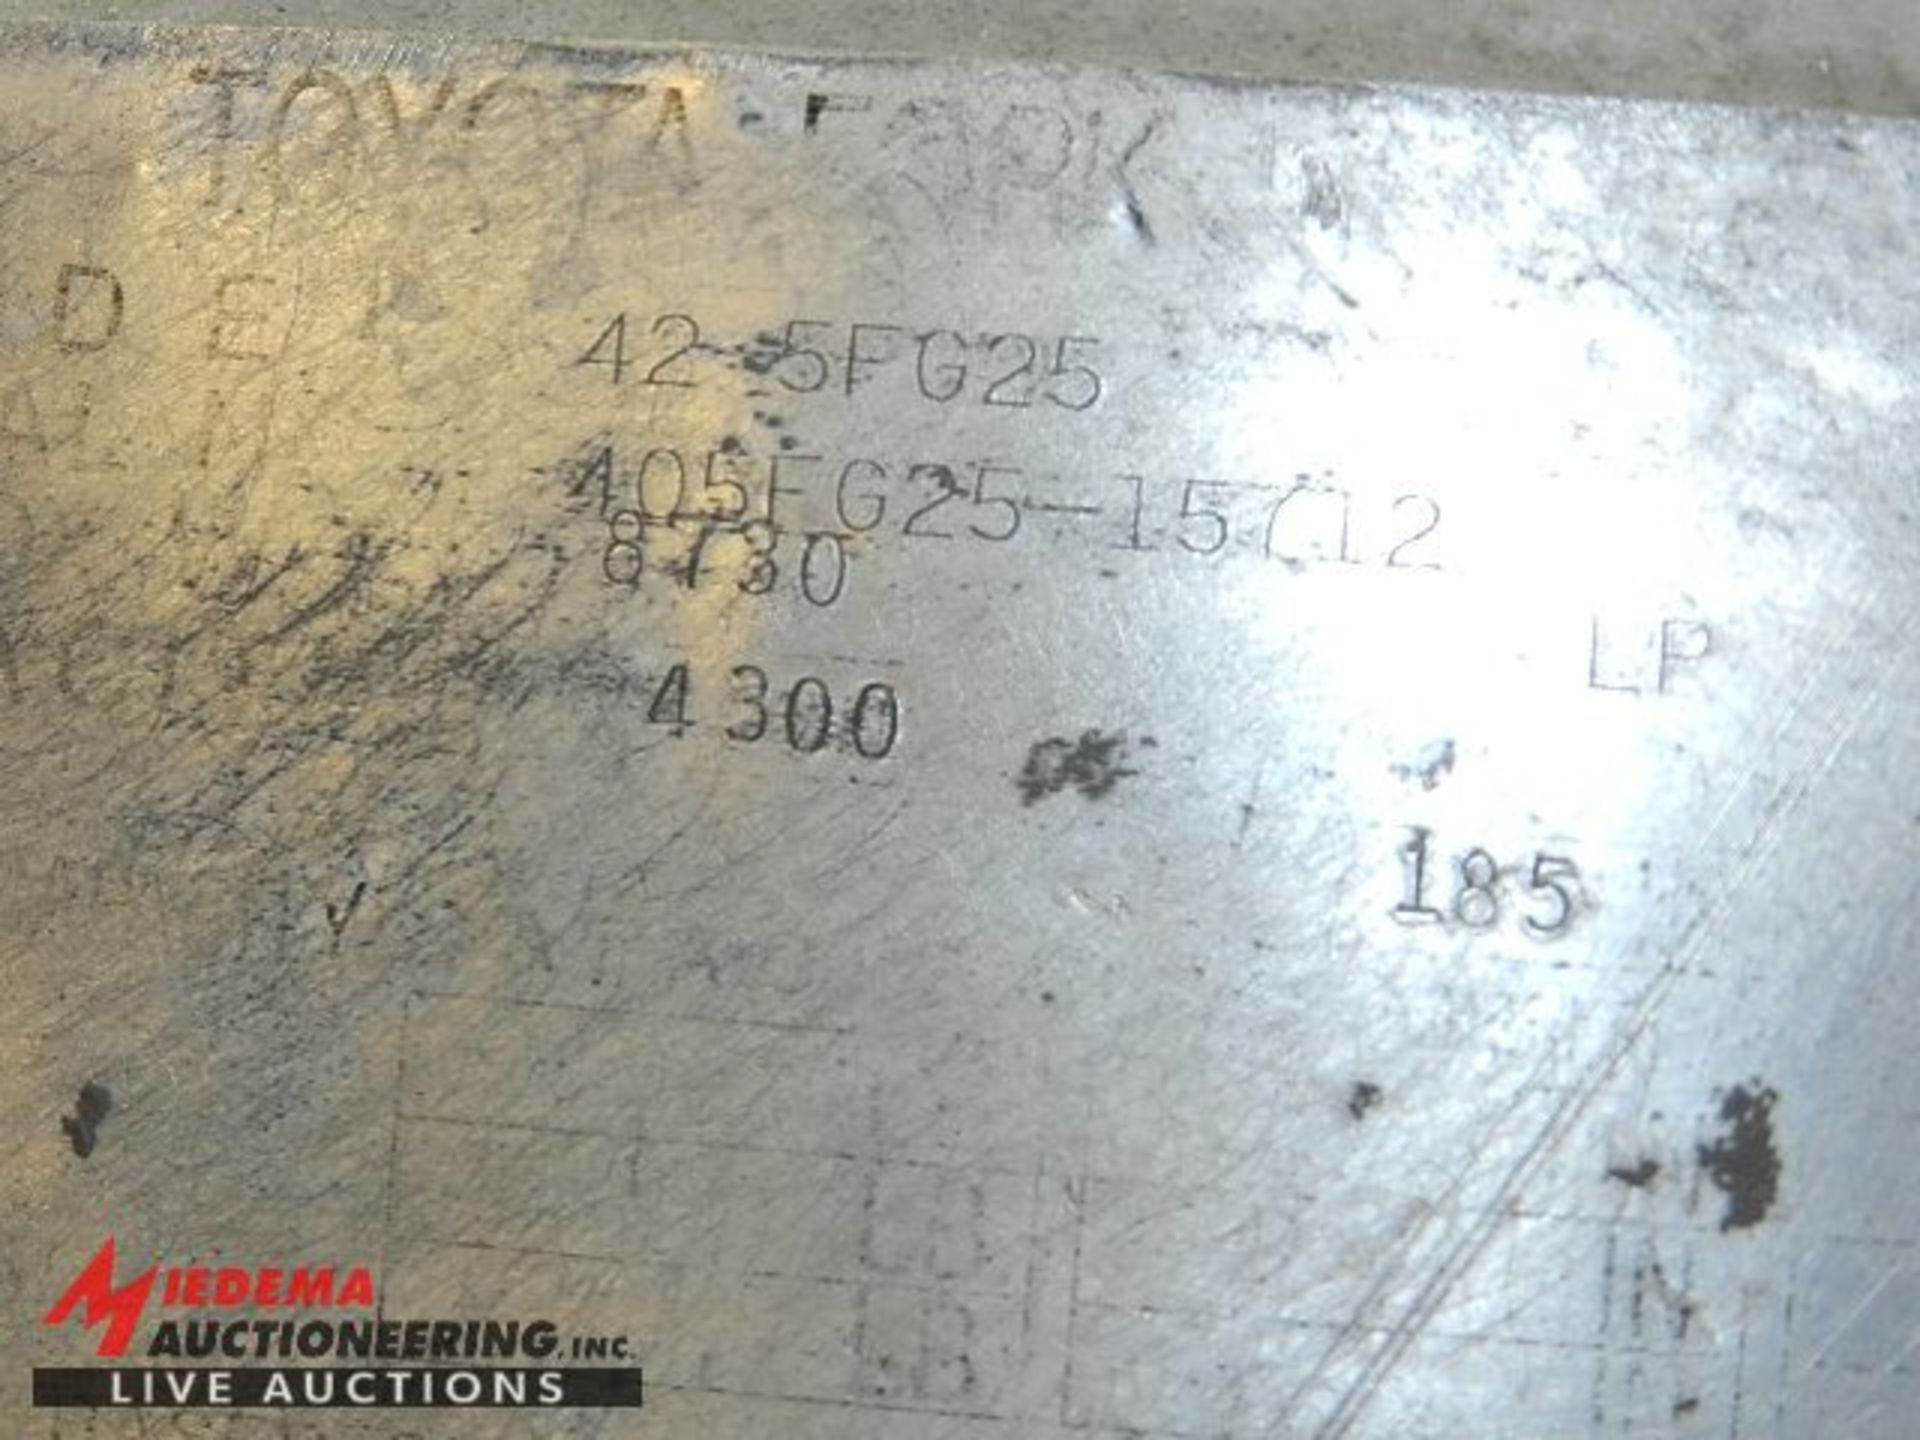 TOYOTA 42-5FG25 LP FORKLIFT TRUCK, HAS 12,109 HOURS SHOWING, 3 STAGE MAST, 42'' FORKS, SIDE SHIFT, - Image 7 of 7